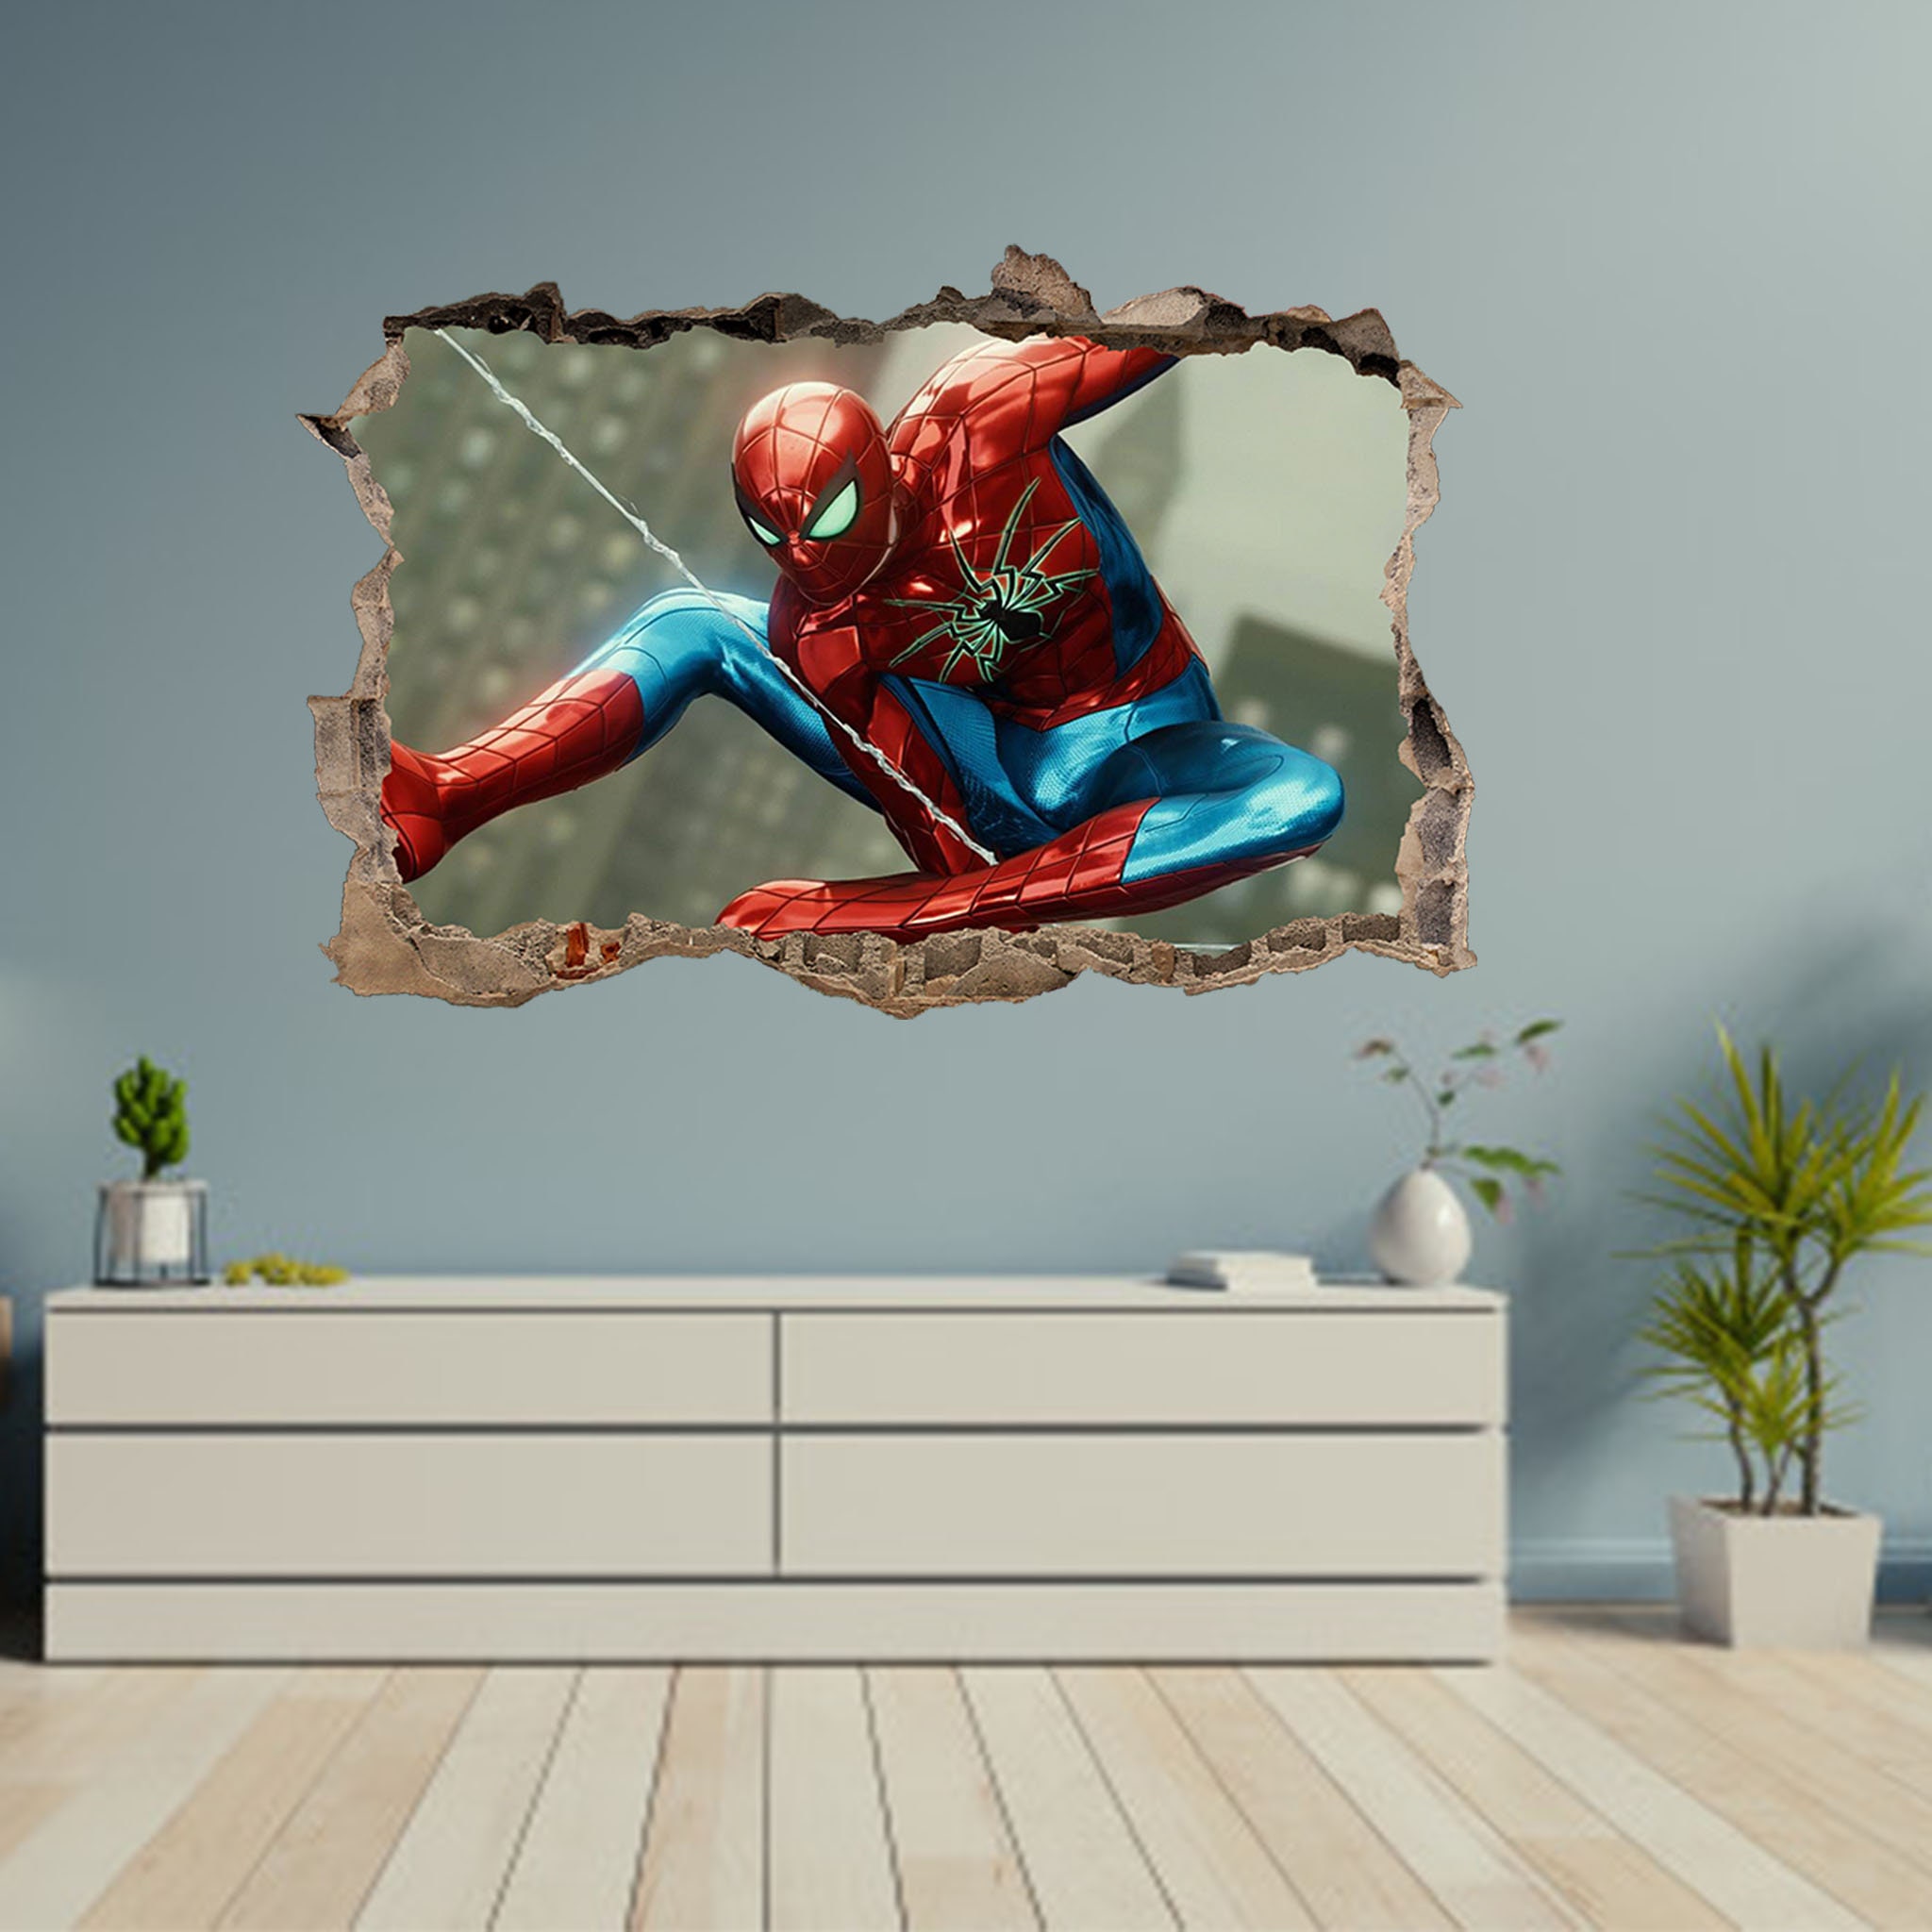 Wall Sticker spiderman with spider